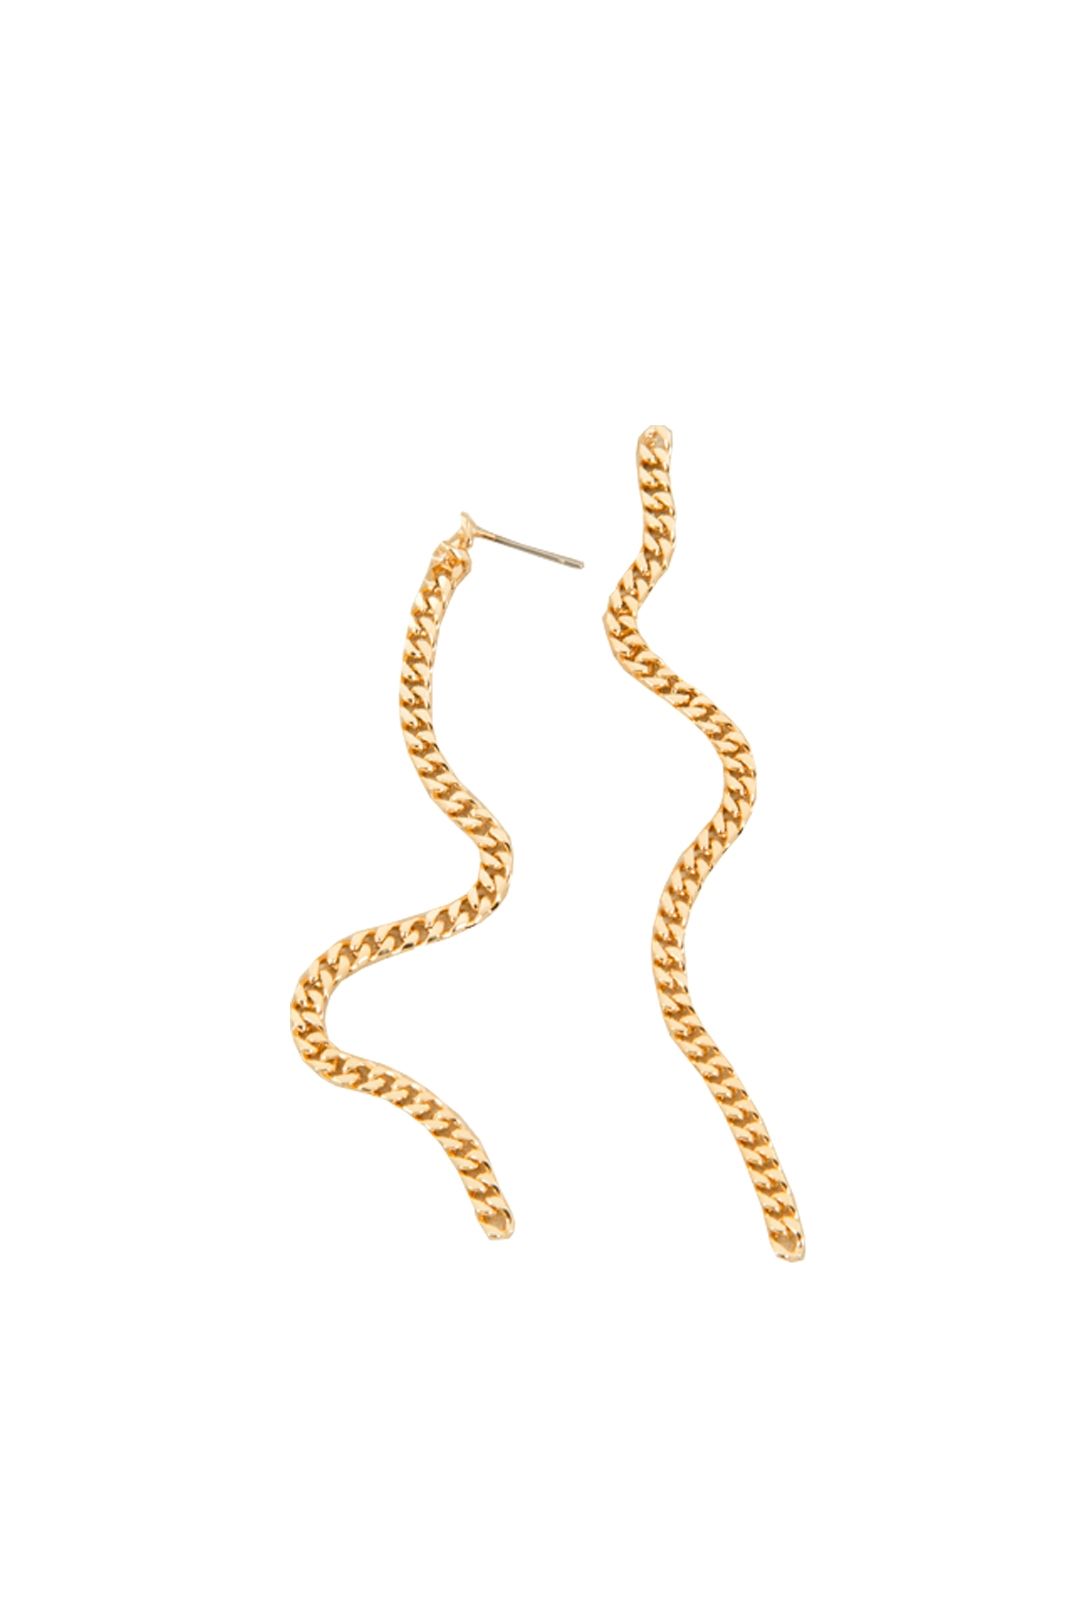 Adorne - Flat Chain Drop Earrings - Gold - Front